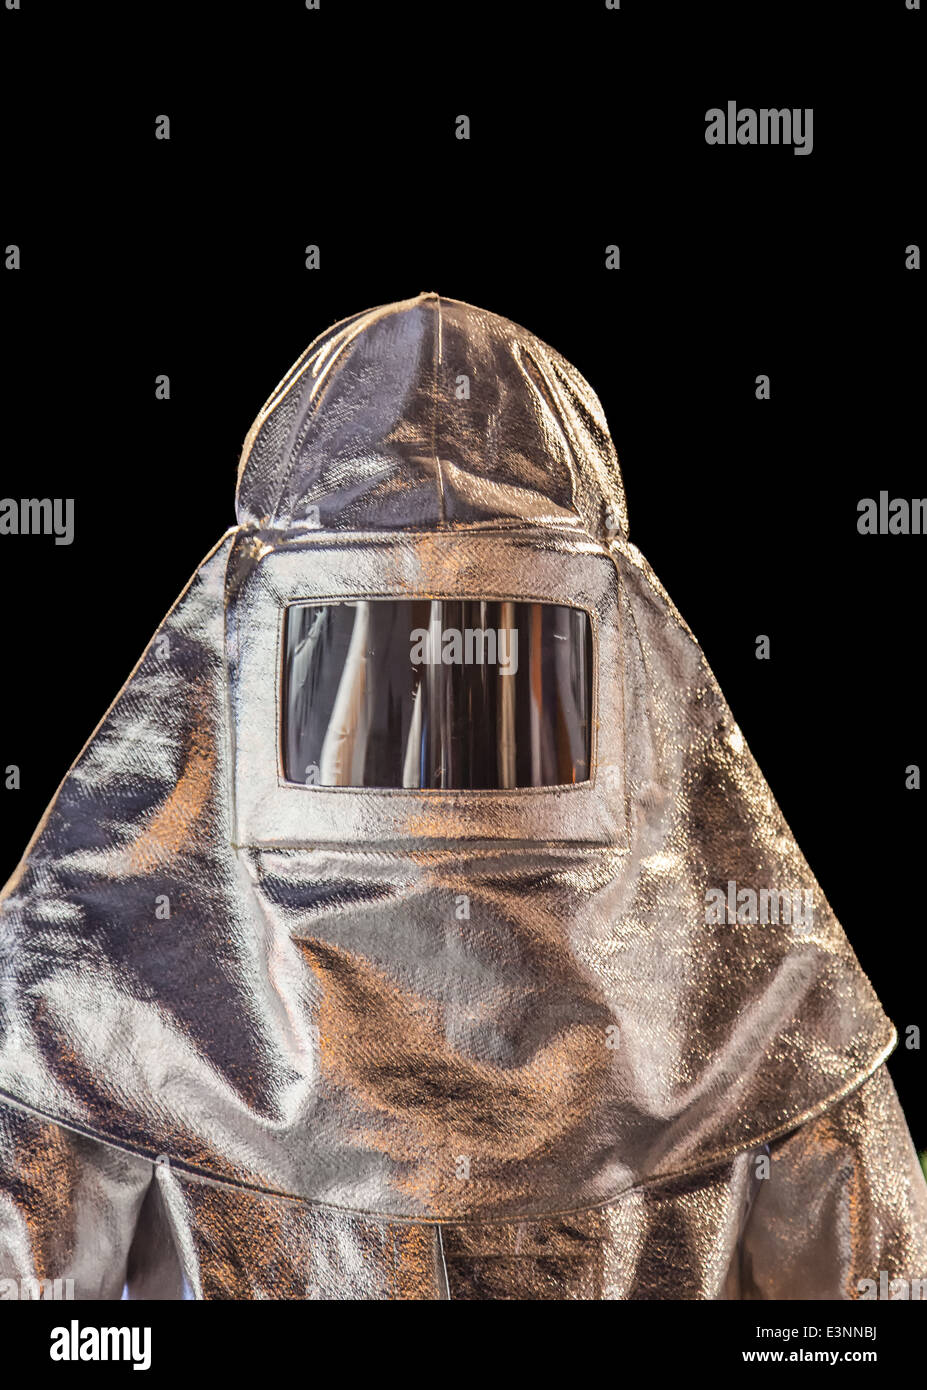 Suit heat protective -Fotos und -Bildmaterial in hoher Auflösung – Alamy